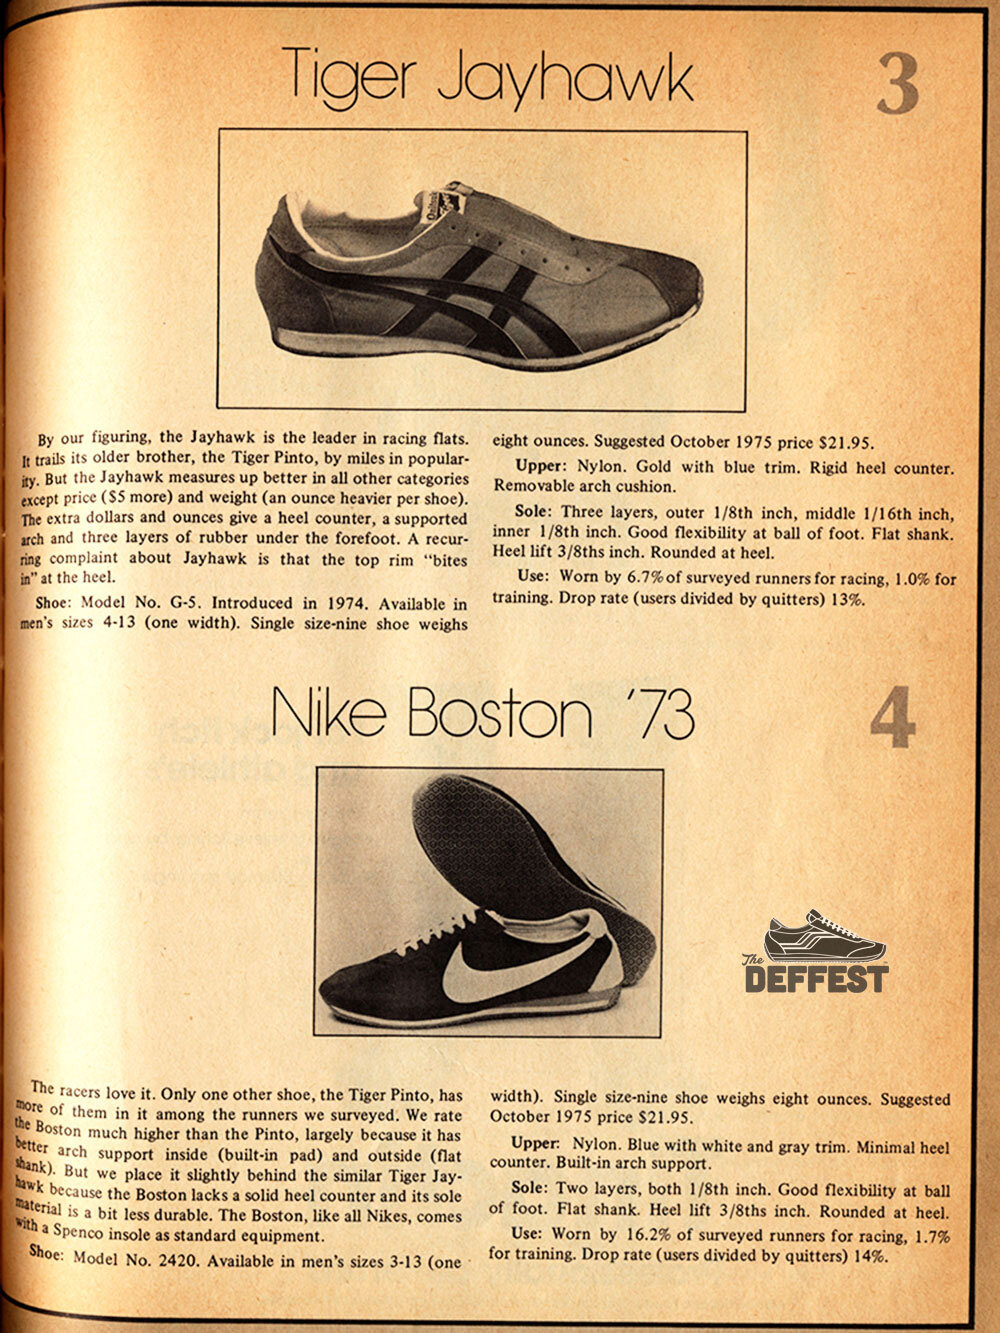 Tiger Jayhawk and Nike Boston '73 vintage running shoe sneaker models detail @ The Deffest